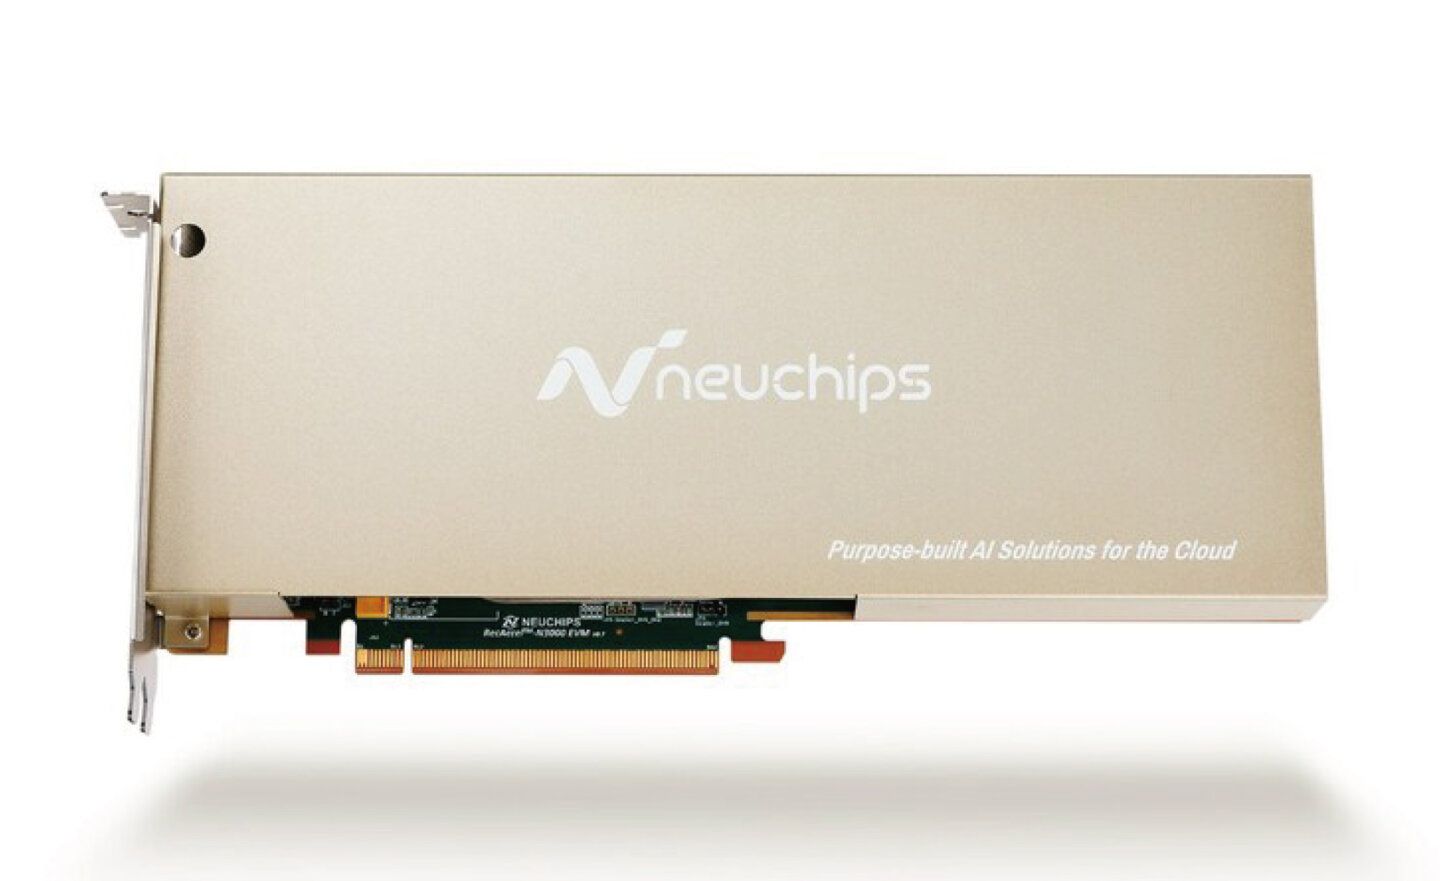 Neuchips 創鑫智慧開發 Raptor 晶片，可實現離線版 ChatGPT